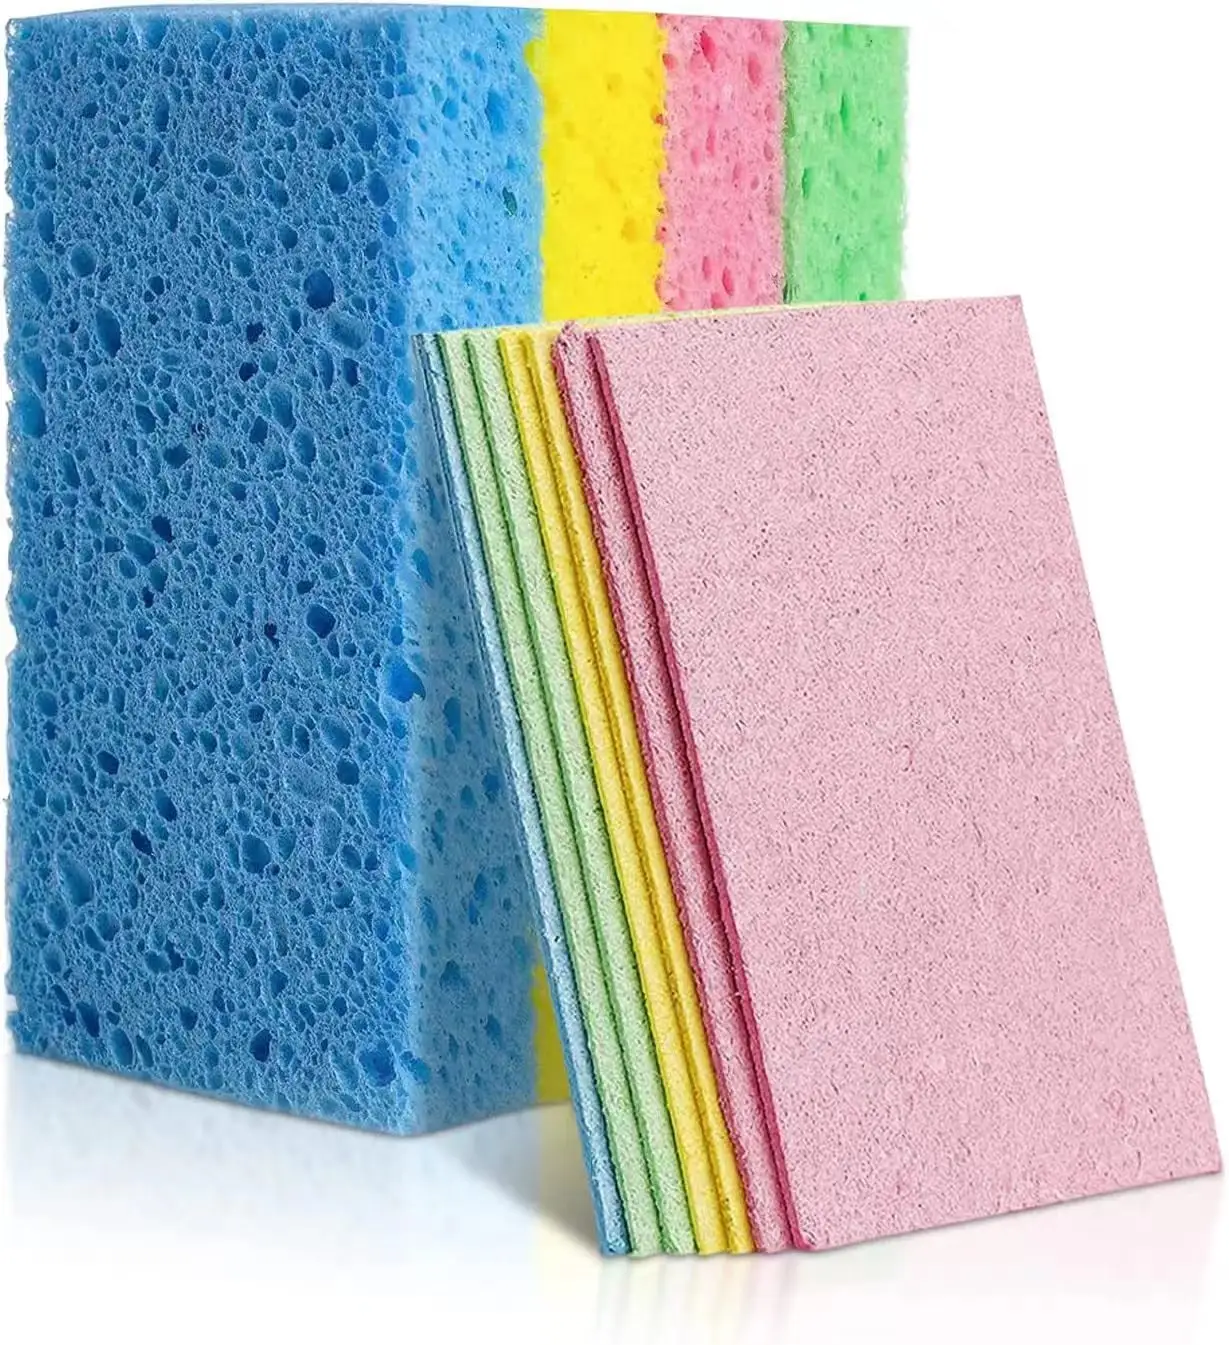 compress ecological cellulose sponge degradable cellulose sponges cleaning sponge microfiber